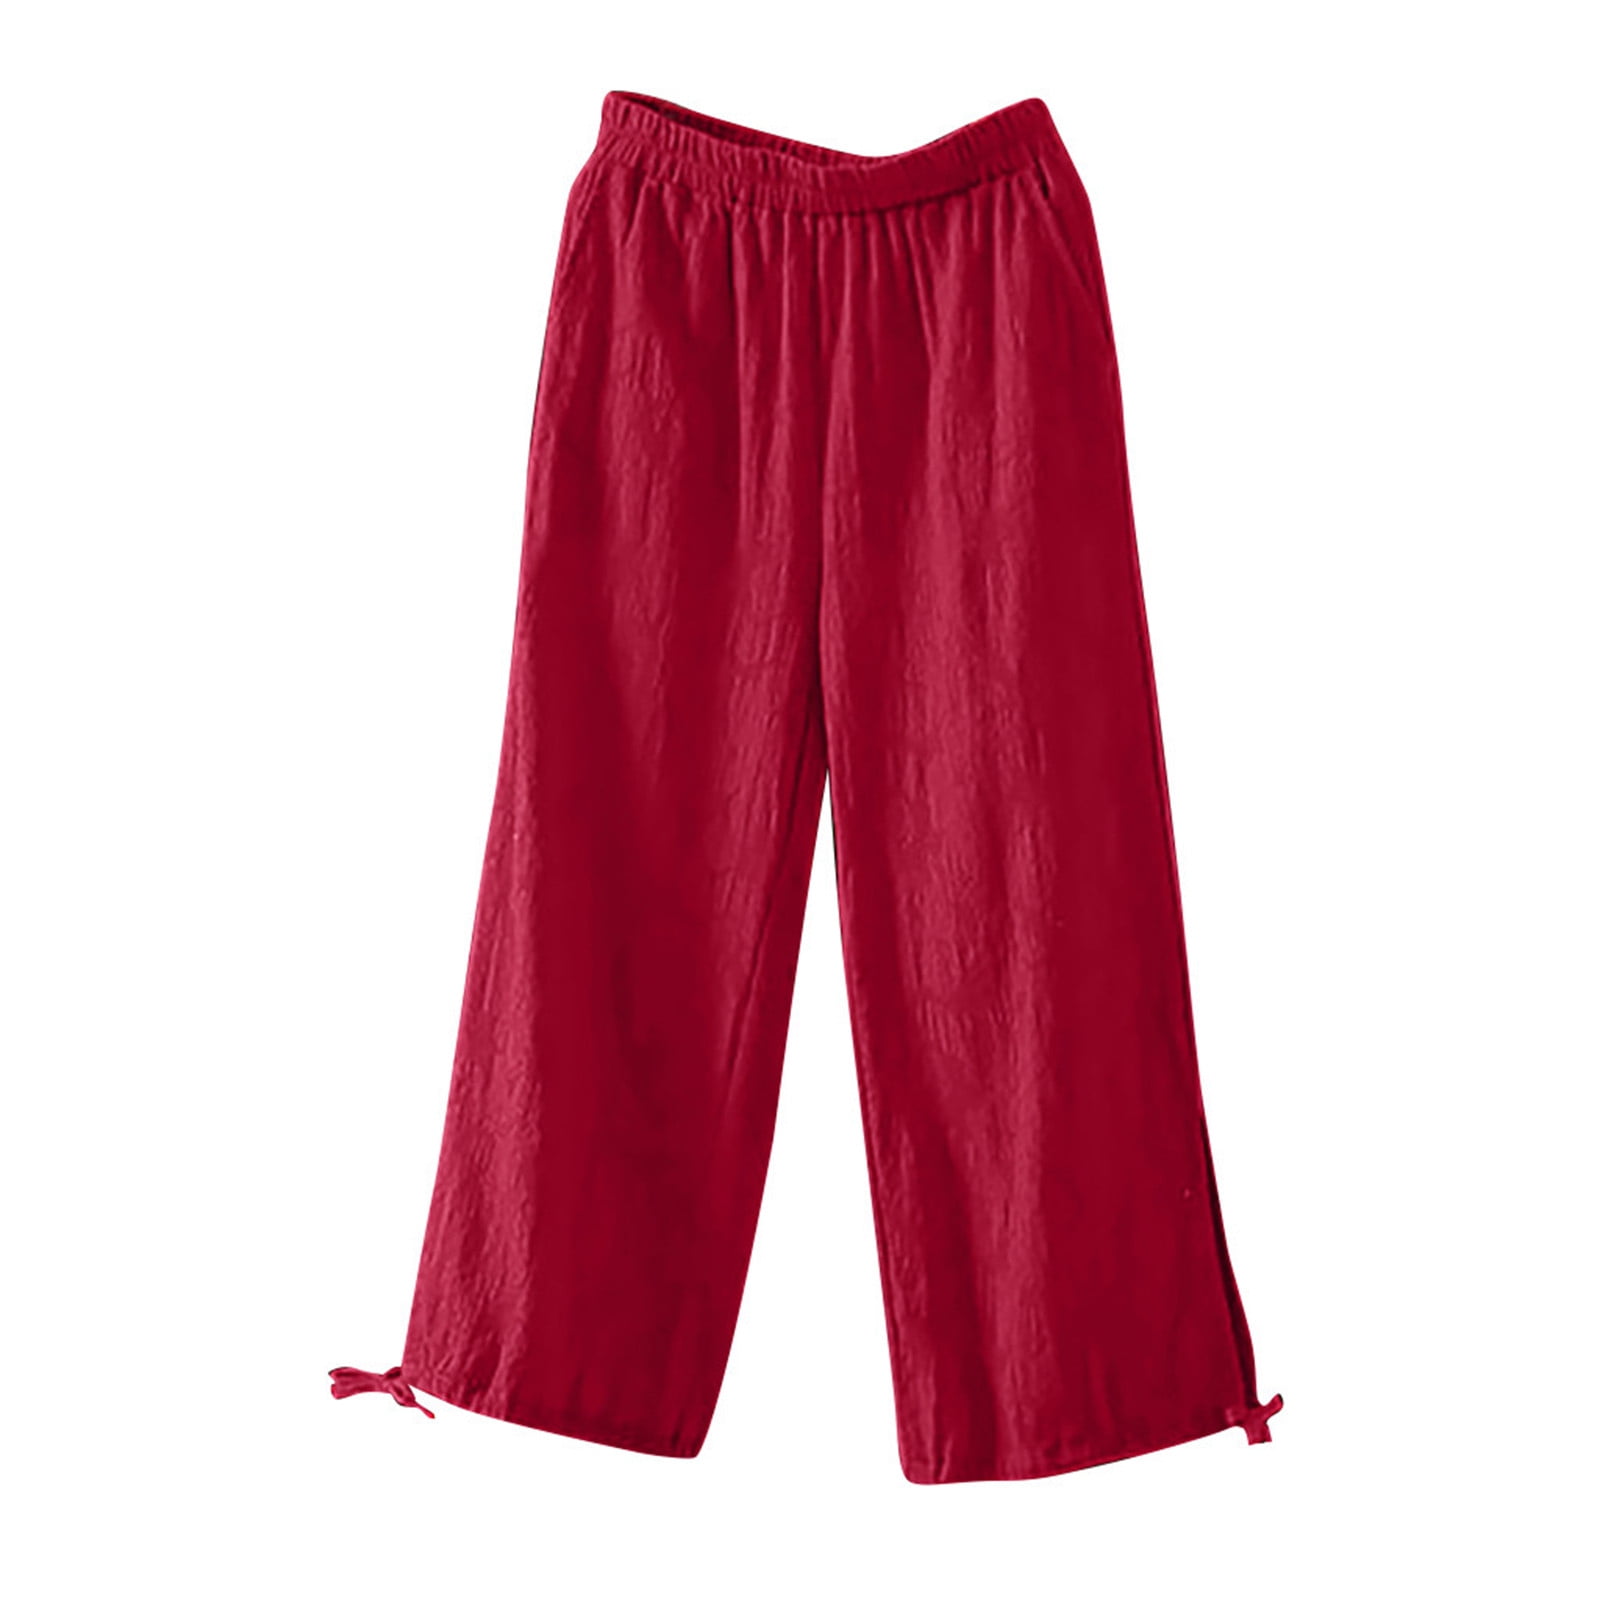 Amtdh Women's Solid Color Cotton Linen Pants Clearance Lounge Trousers ...